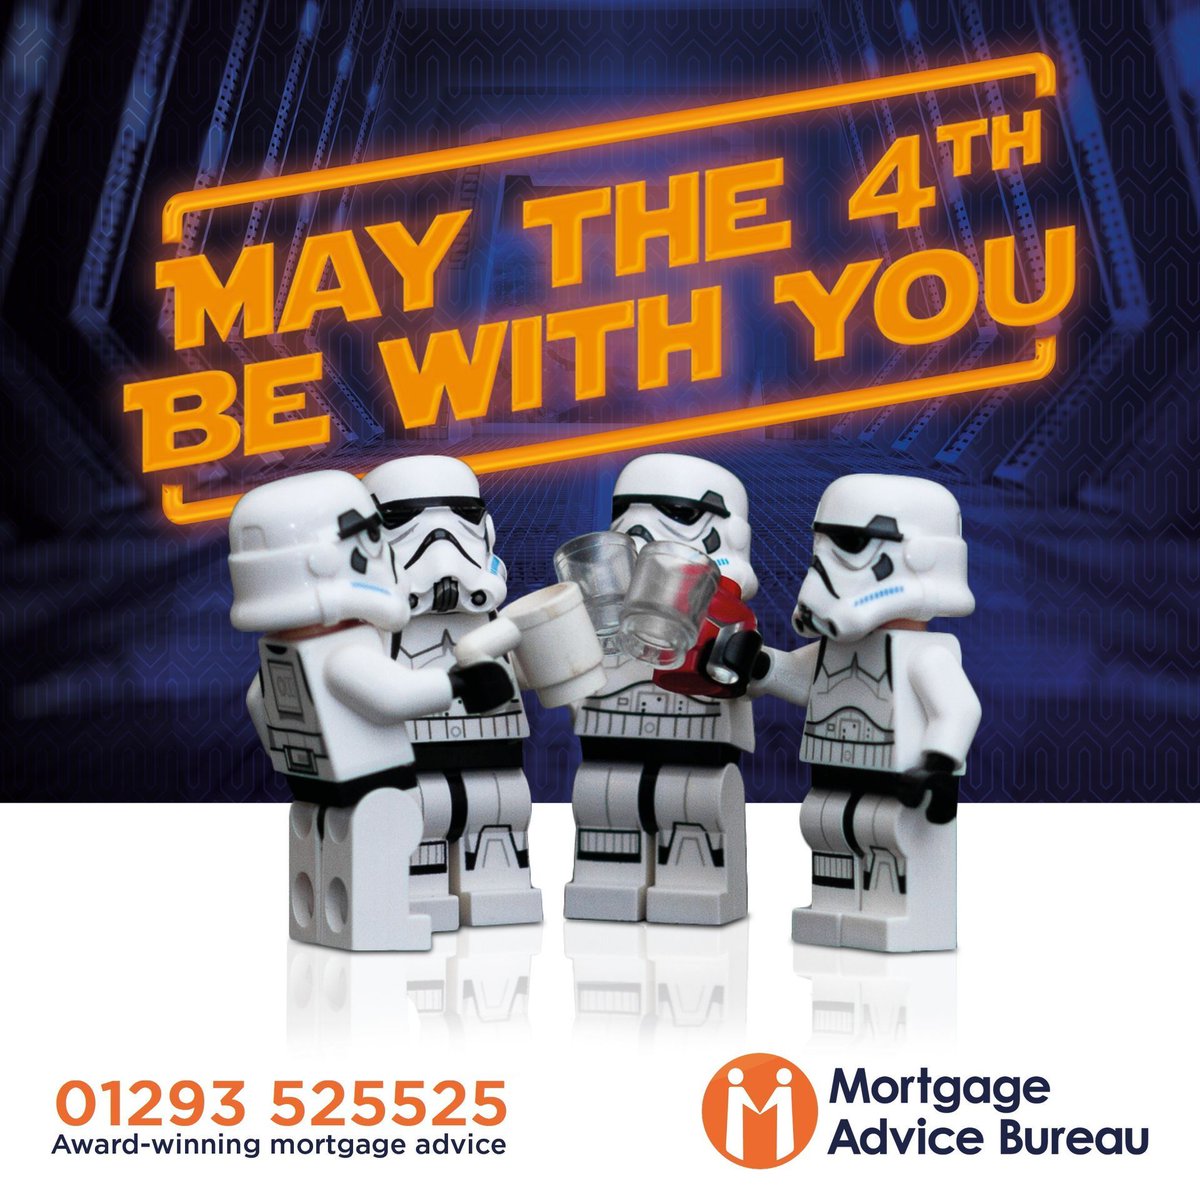 May the 4th Be With You 🌌🛰🚀☄

#mortgageadvice #mortgageadvicebureau #mortgagegehelp